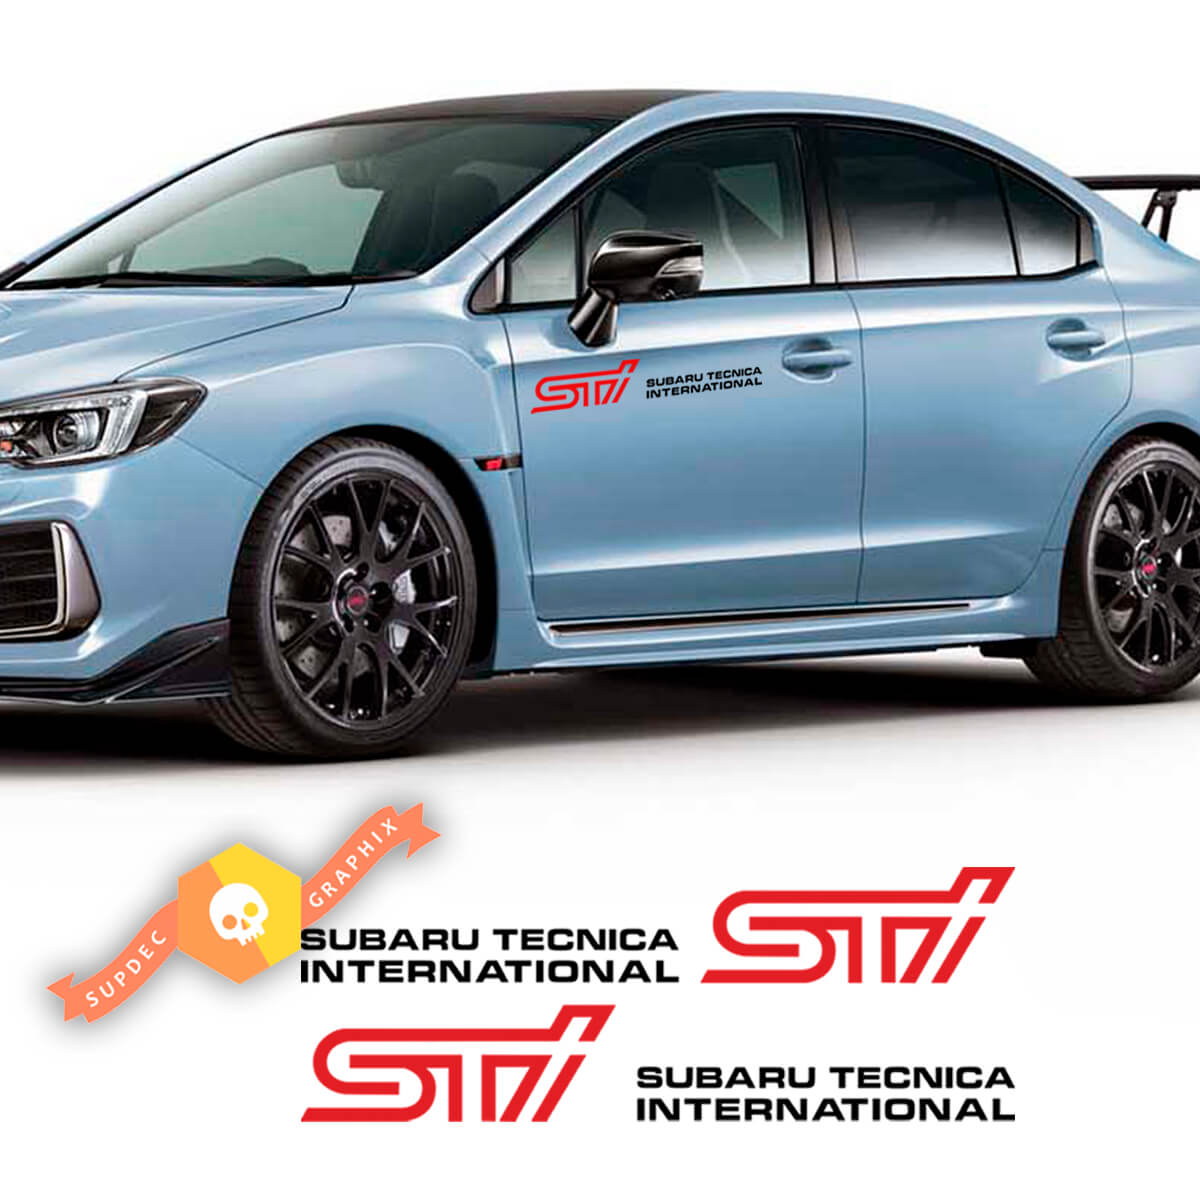 2x STI Subaru Tecnica International Dors Copertina Decalcomanie in vinile Adesivi